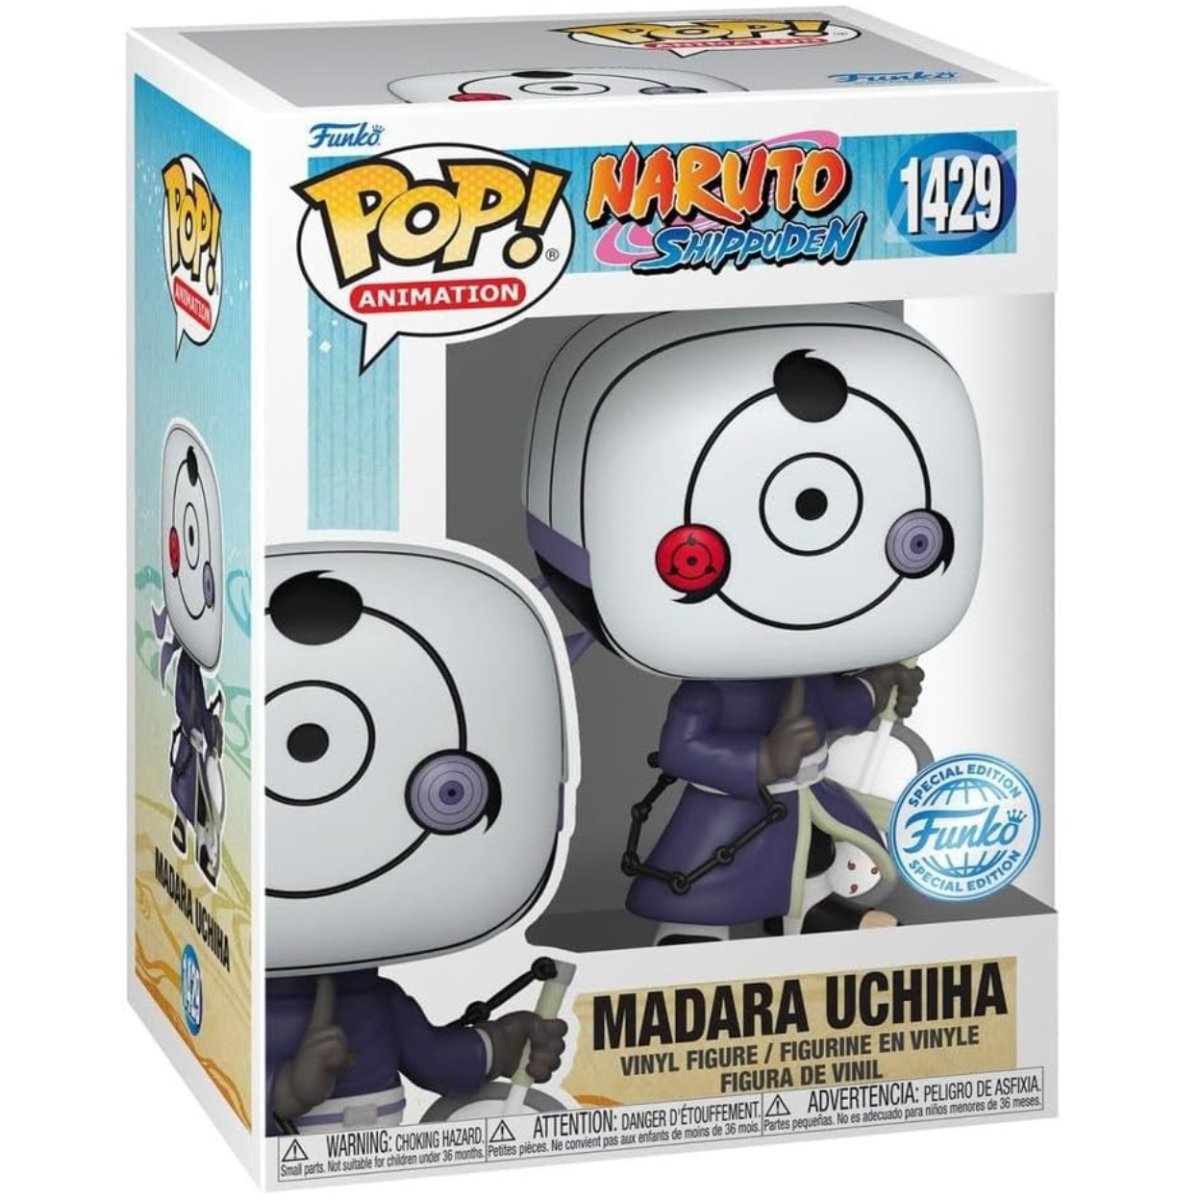 Naruto Shippuden - Madara Uchiha (Special Edition) #1429 - Funko Pop! Vinyl Anime - Persona Toys